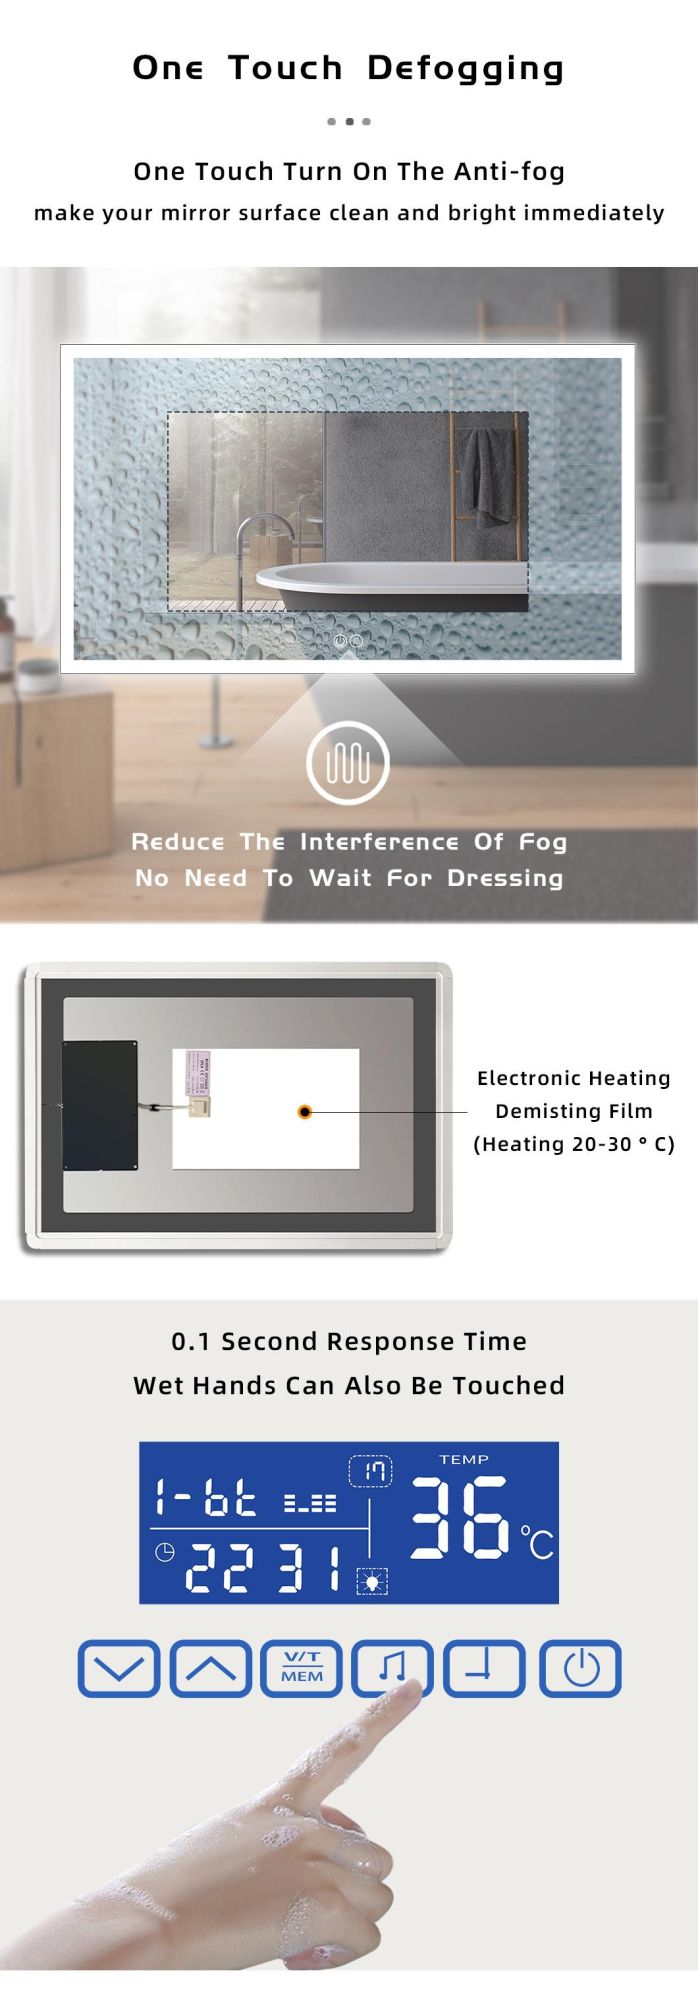 European Hot Sales Touch Screen Control LED Vanity Mirror CE Smart Bathroom Mirror Round Bath Mirrors